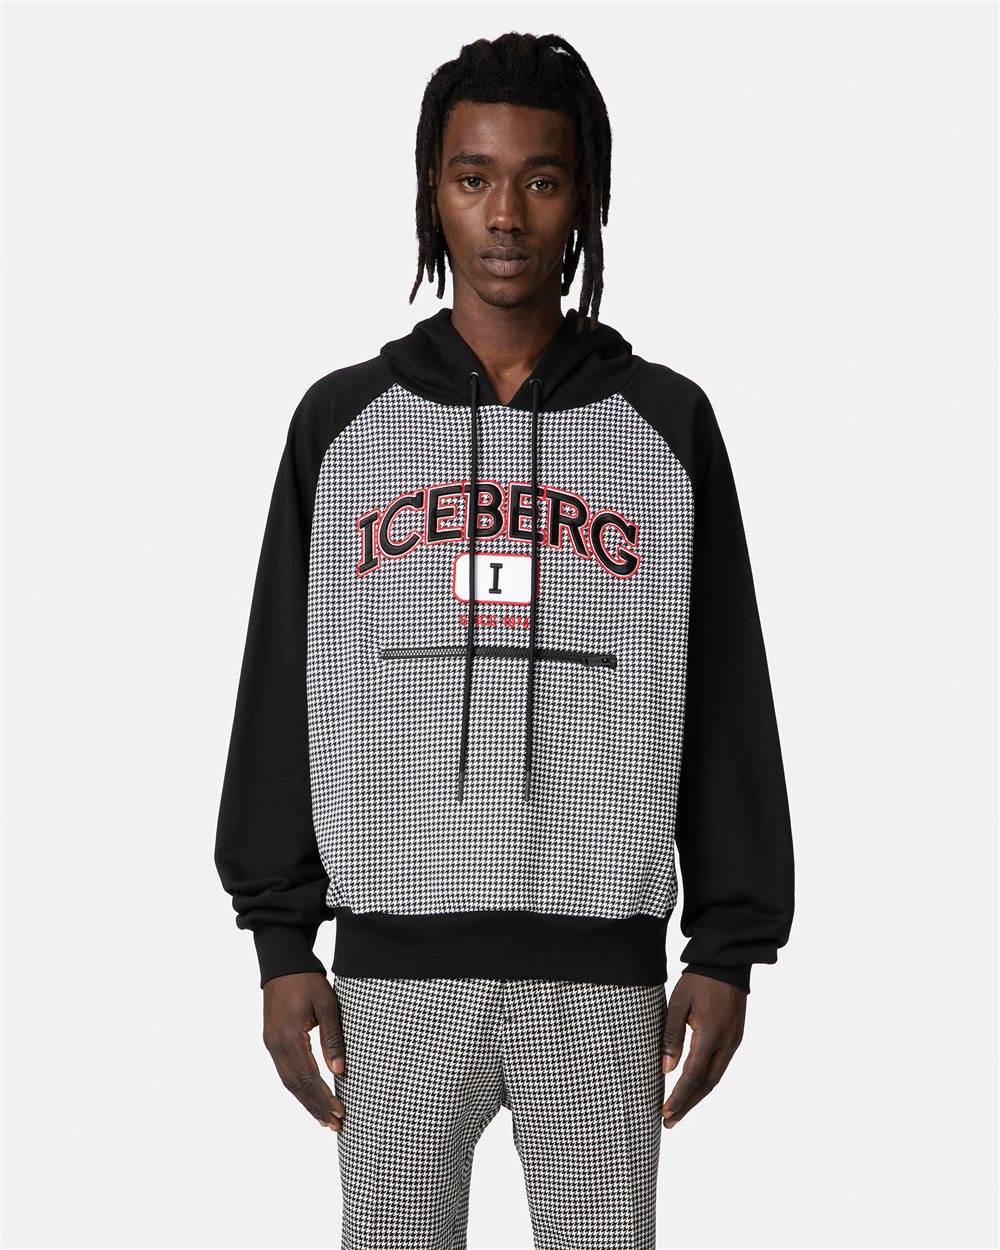 Iceberg Hooded Sweatshirt with Allover Cartoon Design